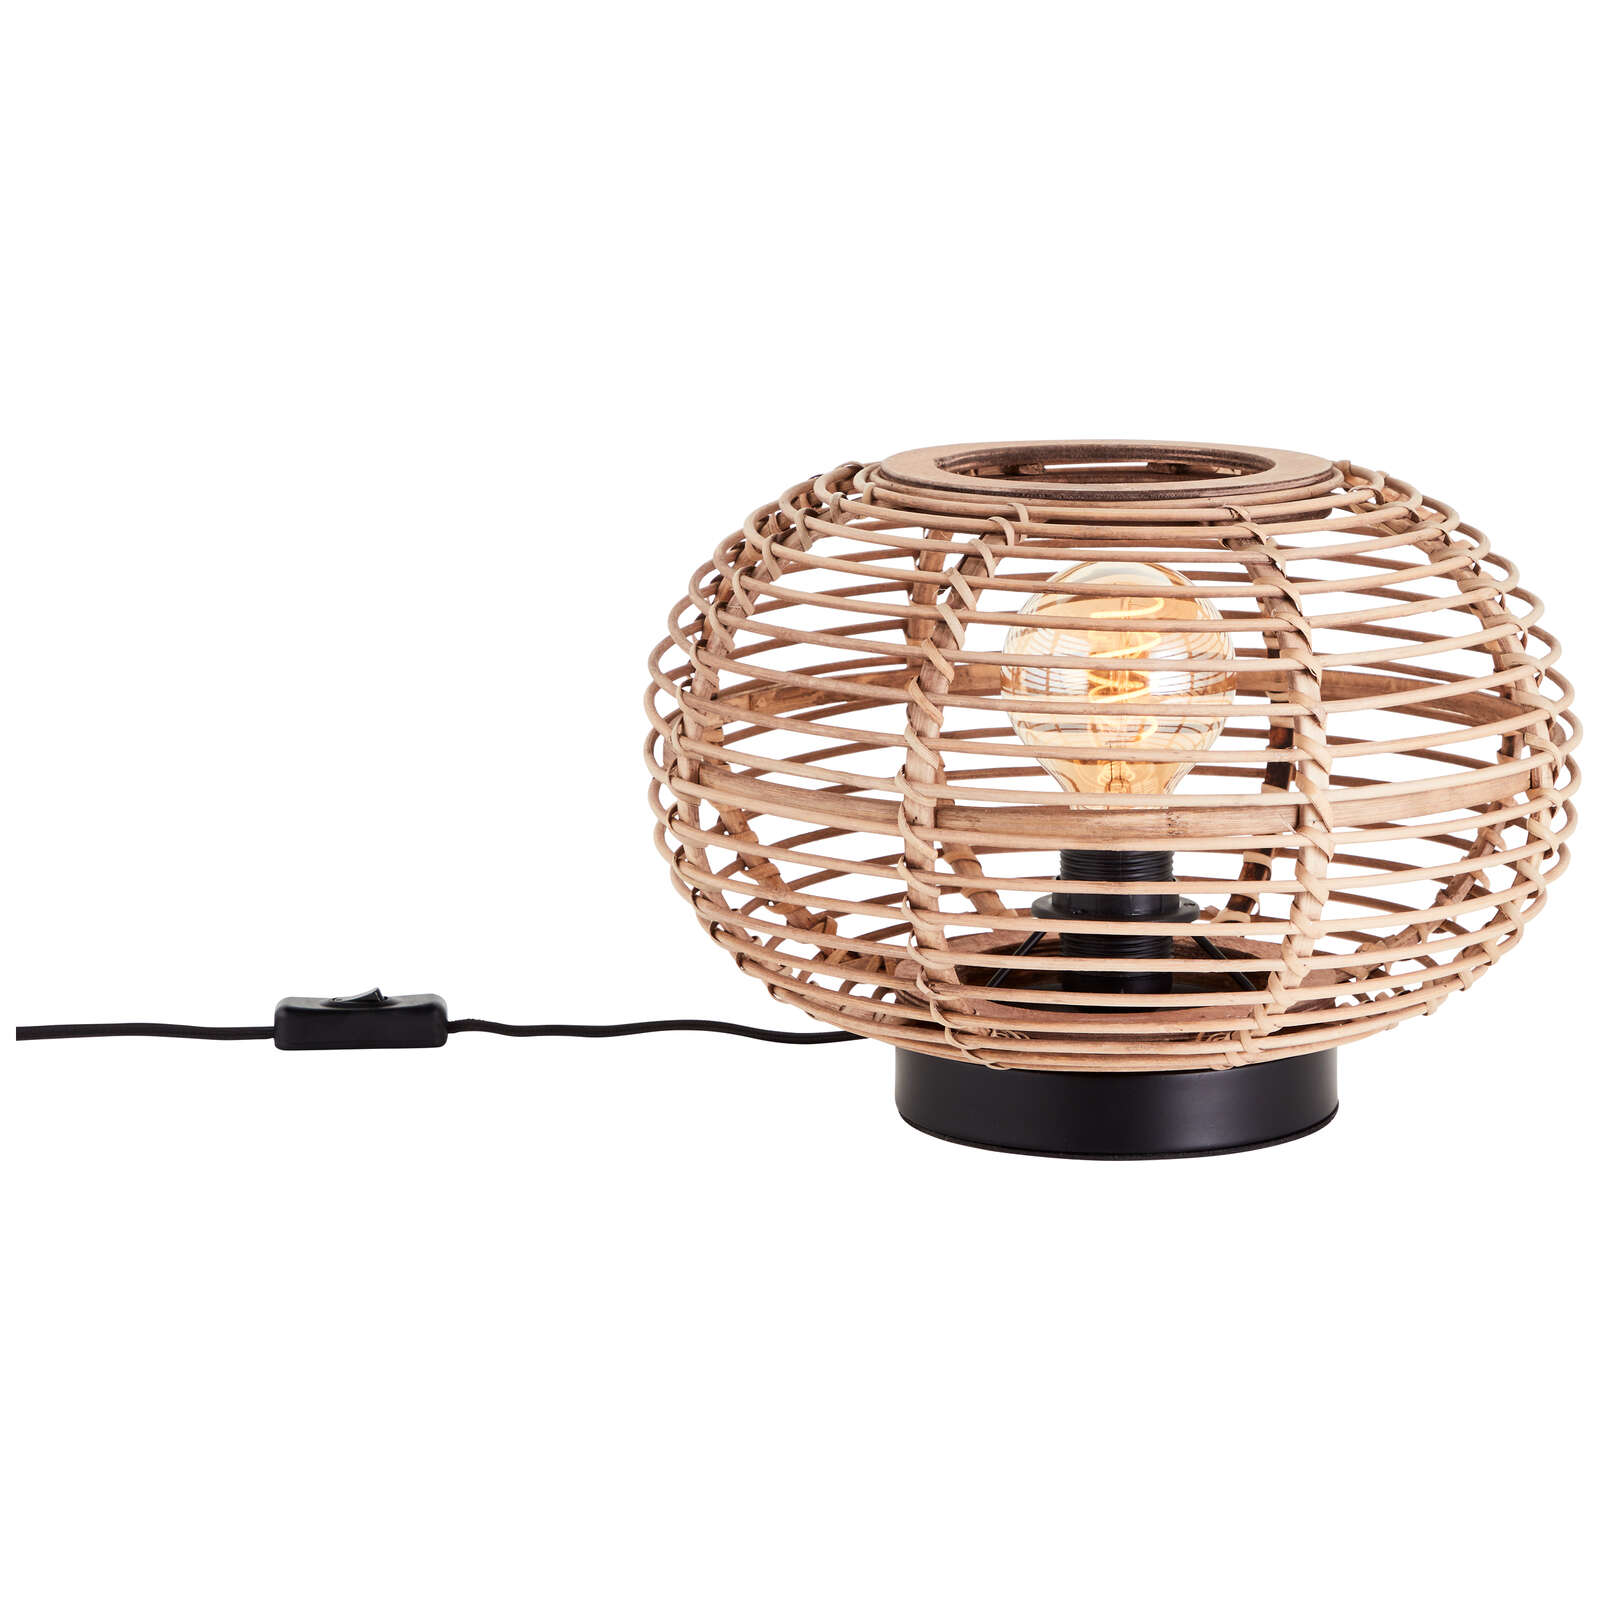             Metalen tafellamp - Viktor 3 - Bruin
        